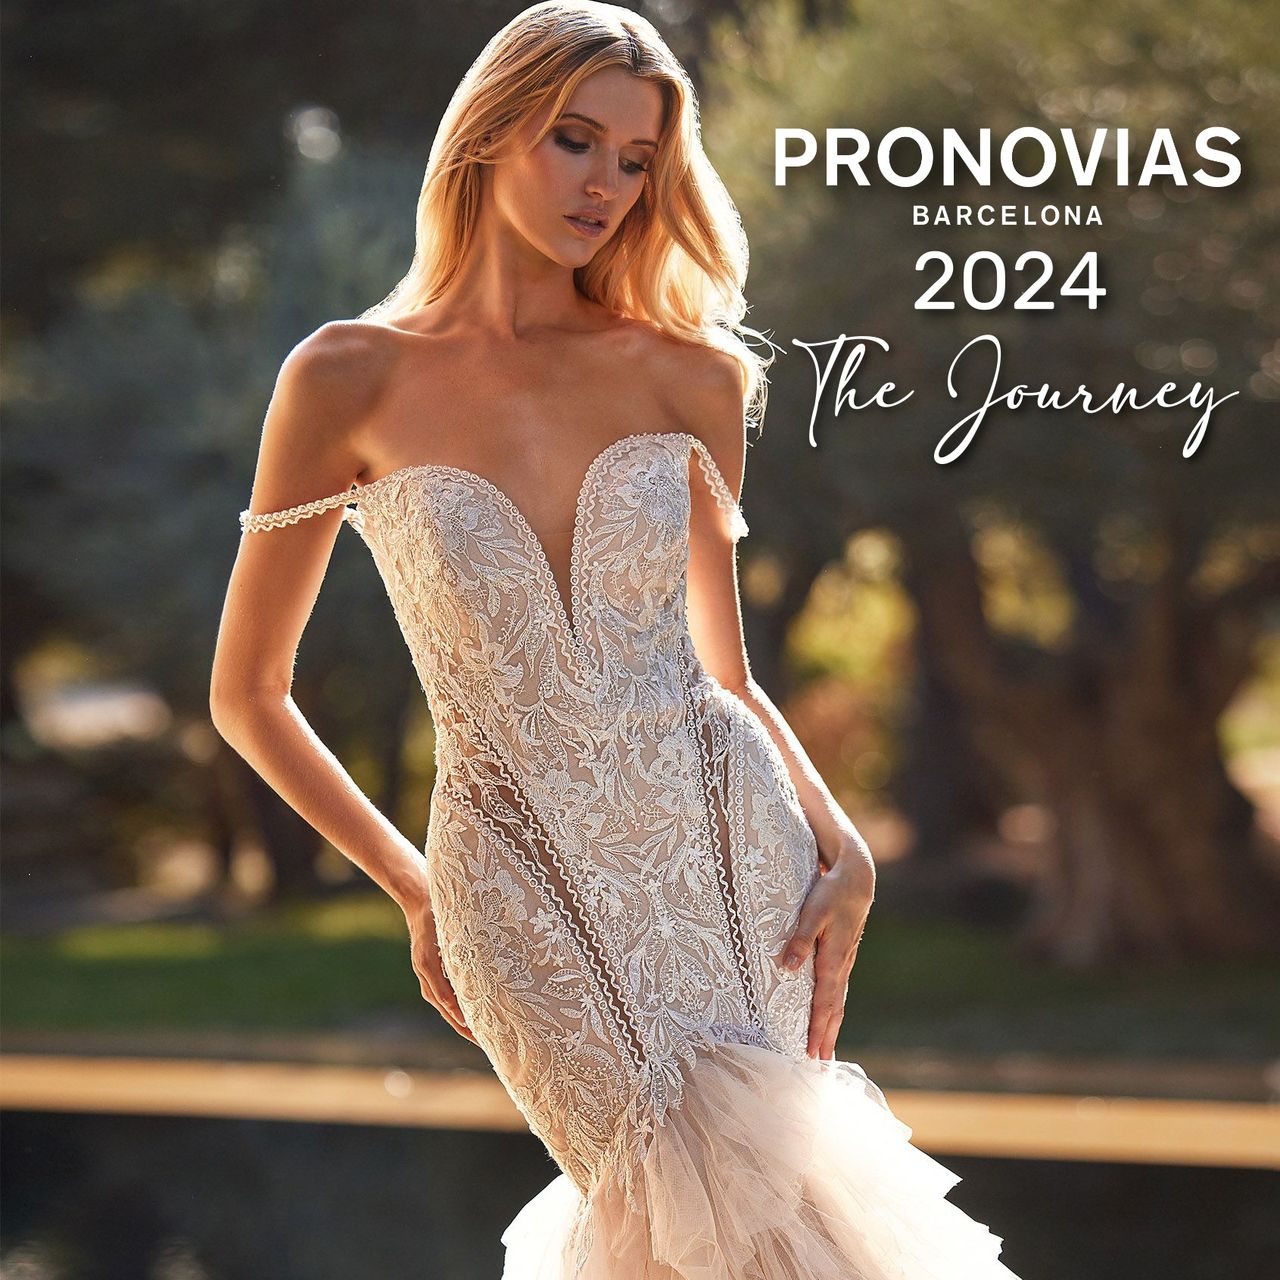 Pronovias 2024 The Journey 